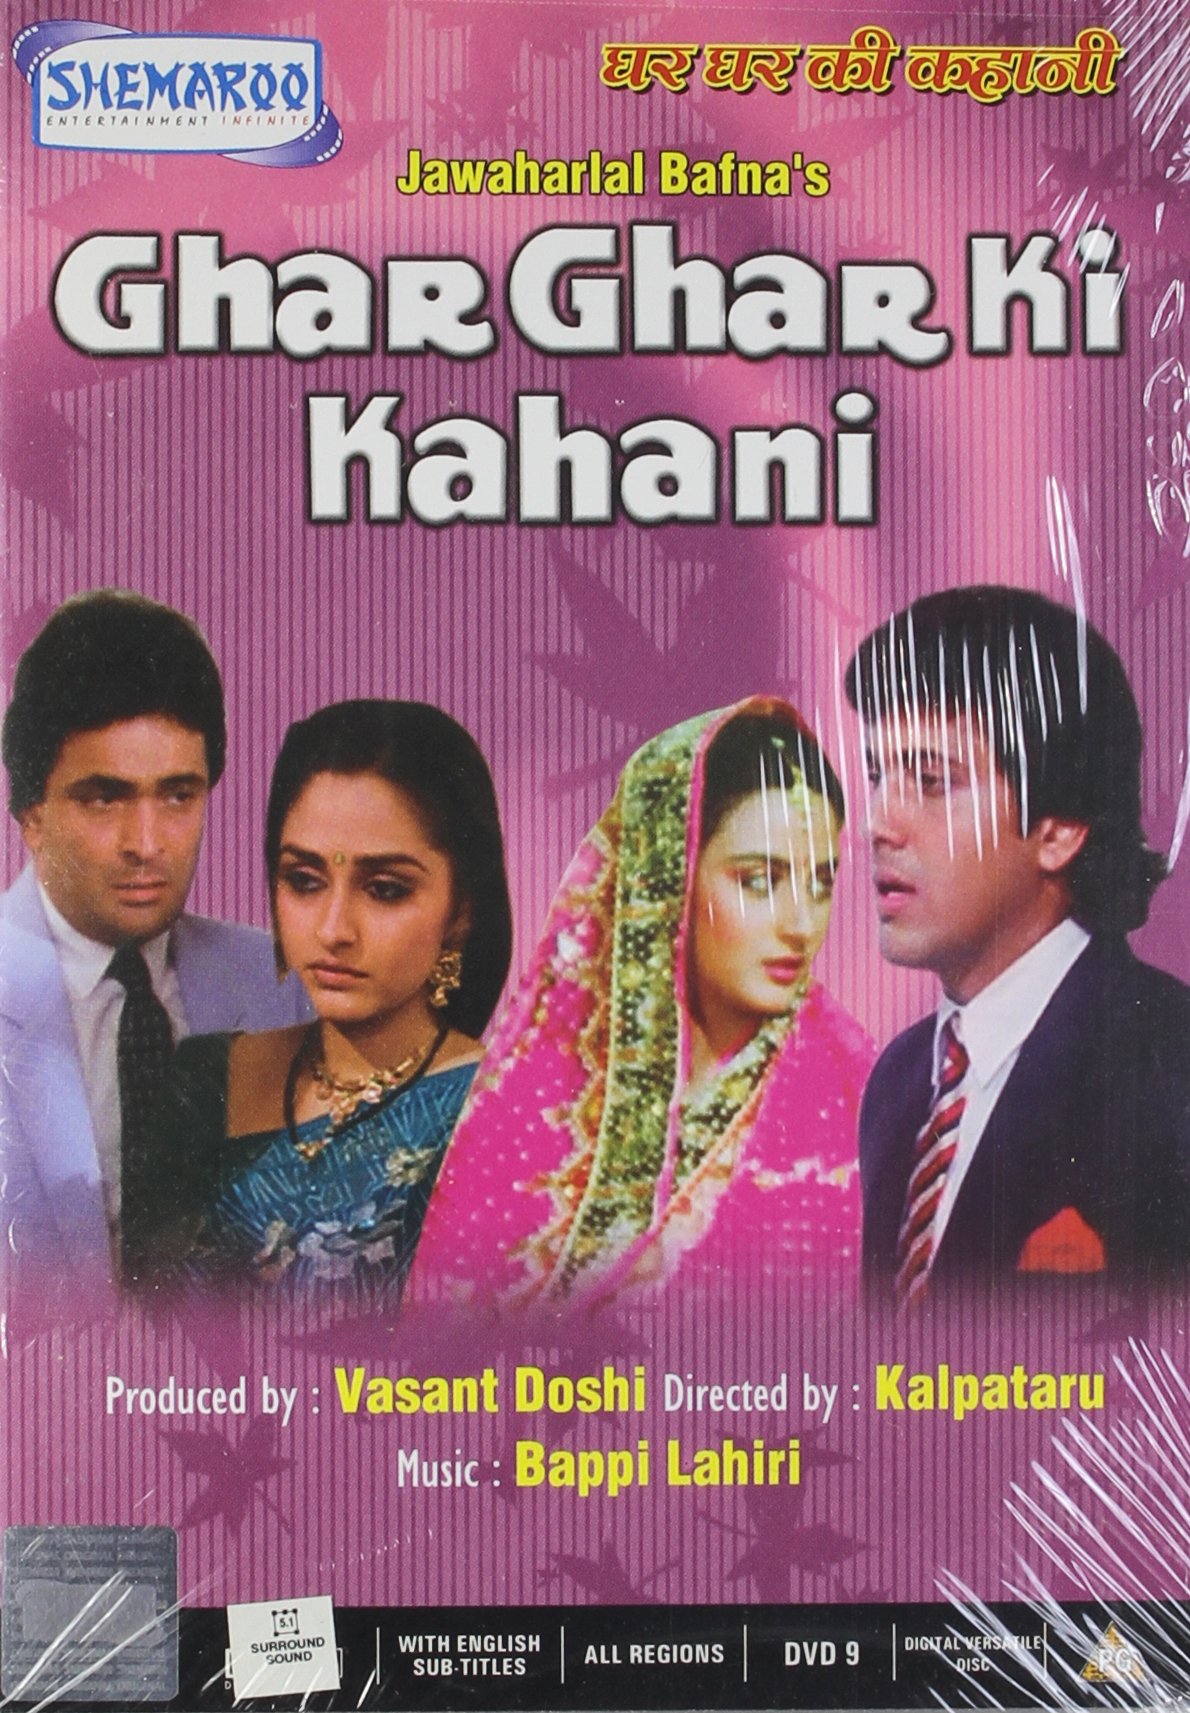 ghar-ghar-ki-kahani-movie-purchase-or-watch-online